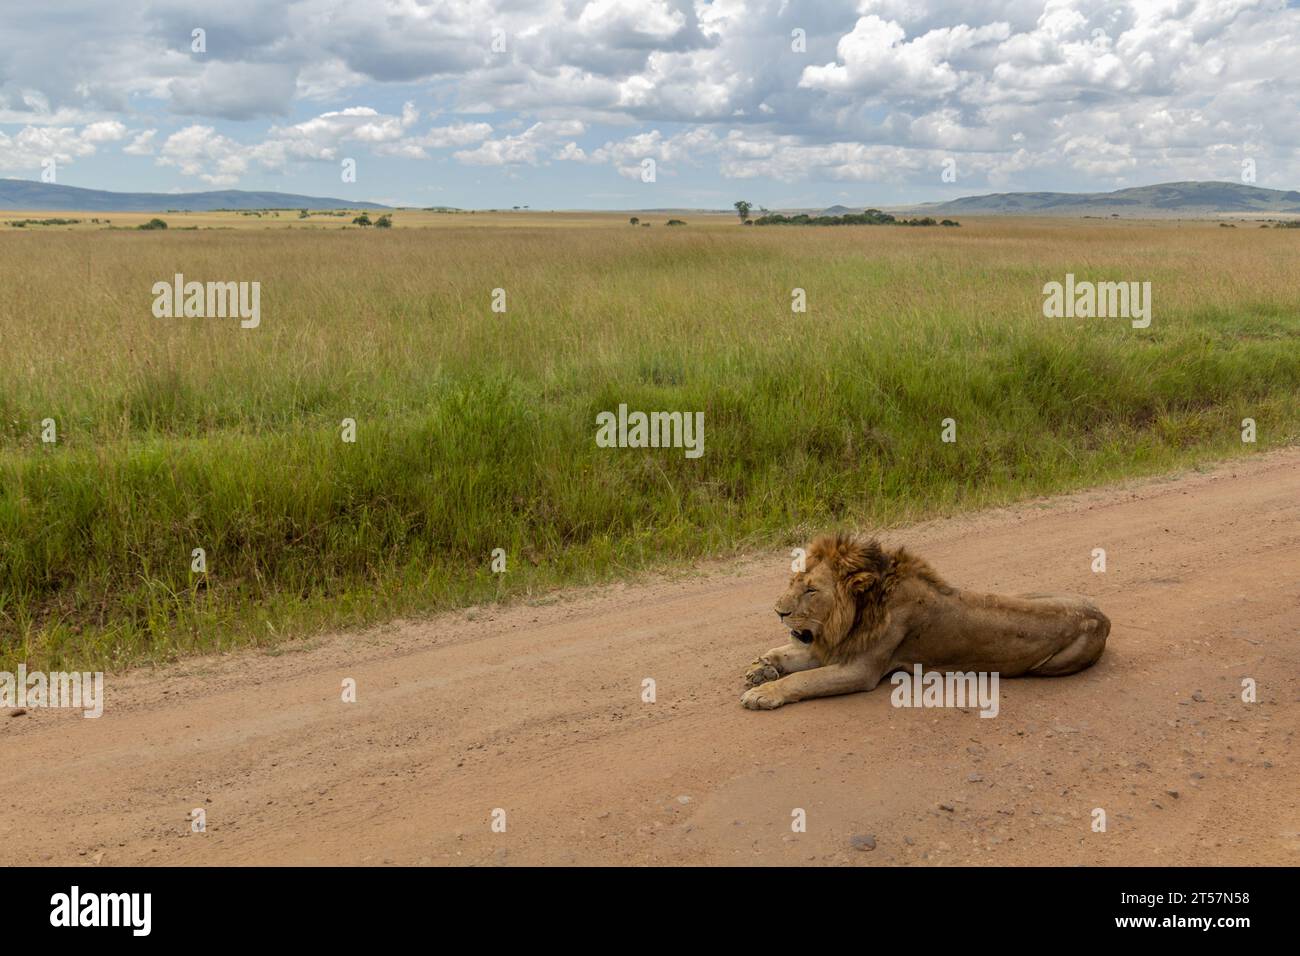 Lion in Masai Mara National Reserve, Kenya Stock Photo